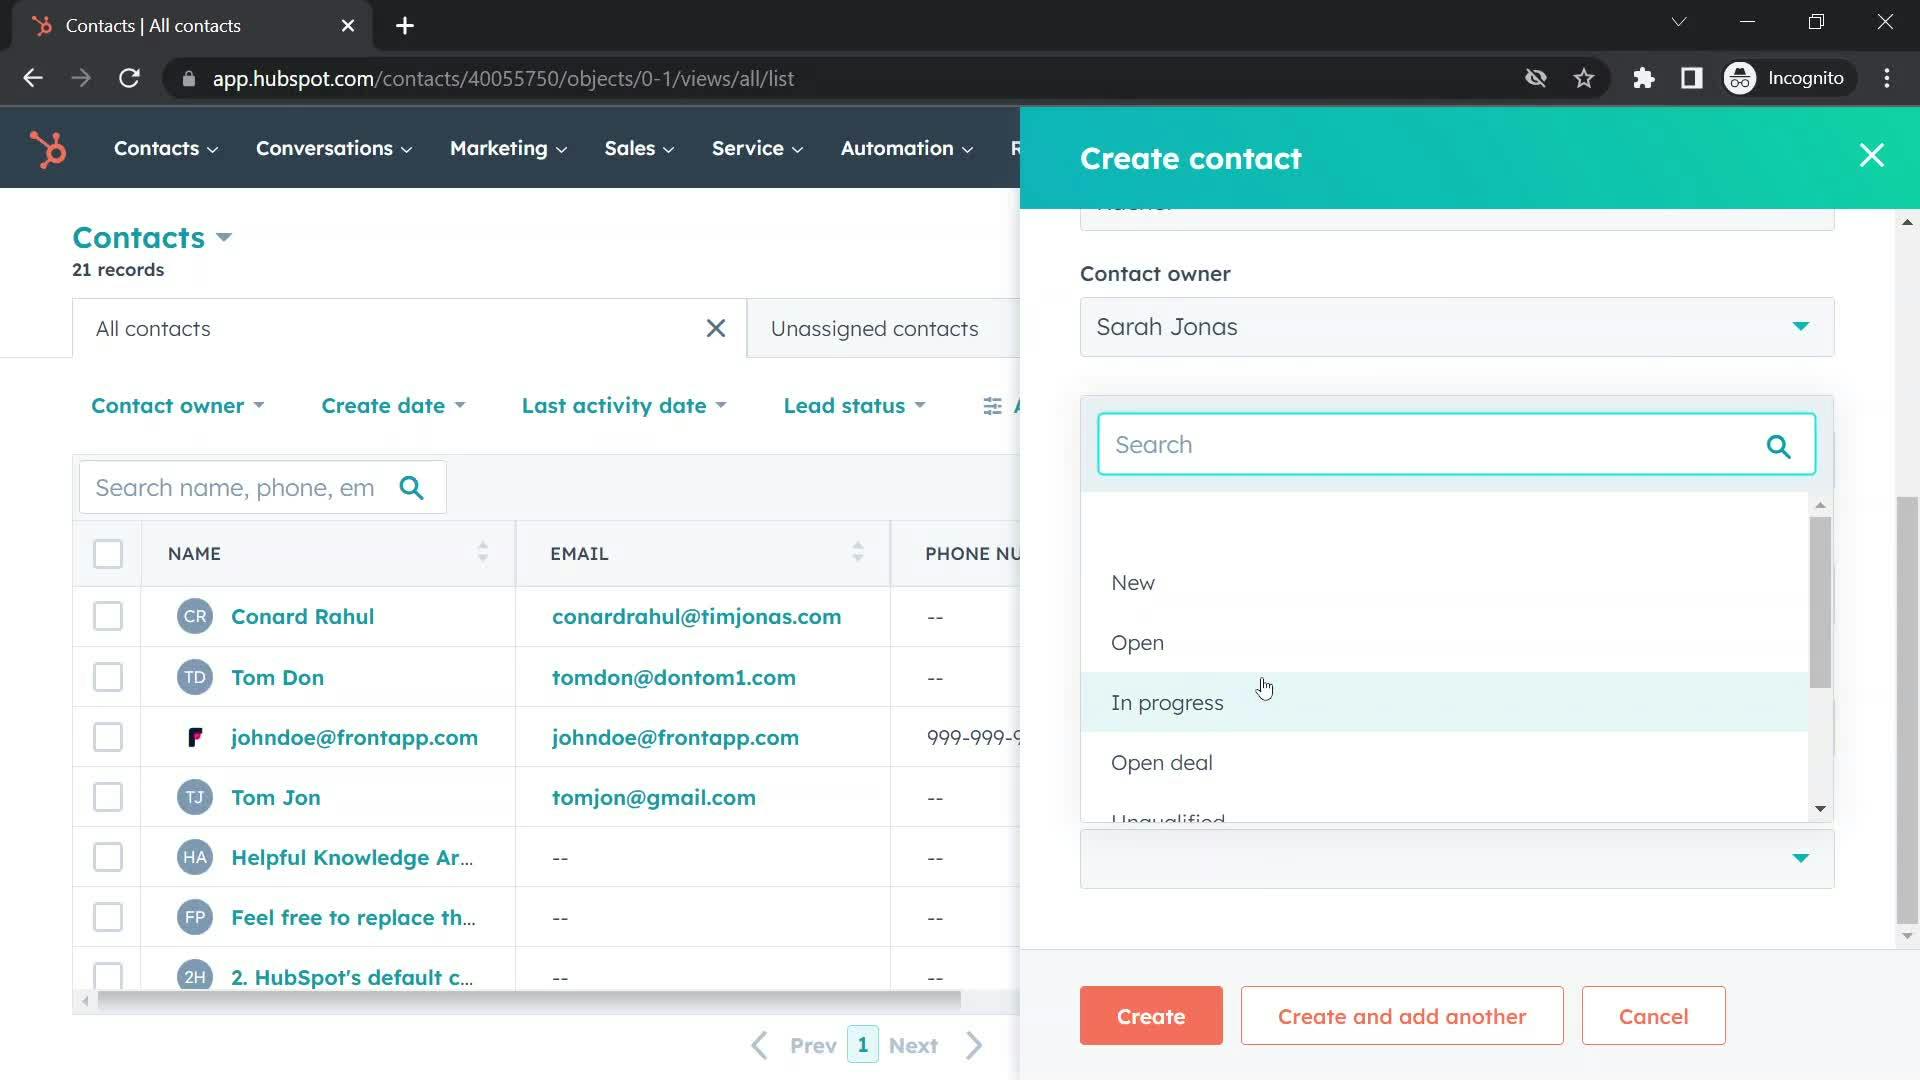 Screenshot of Hubspot platform showing contacts creation screen